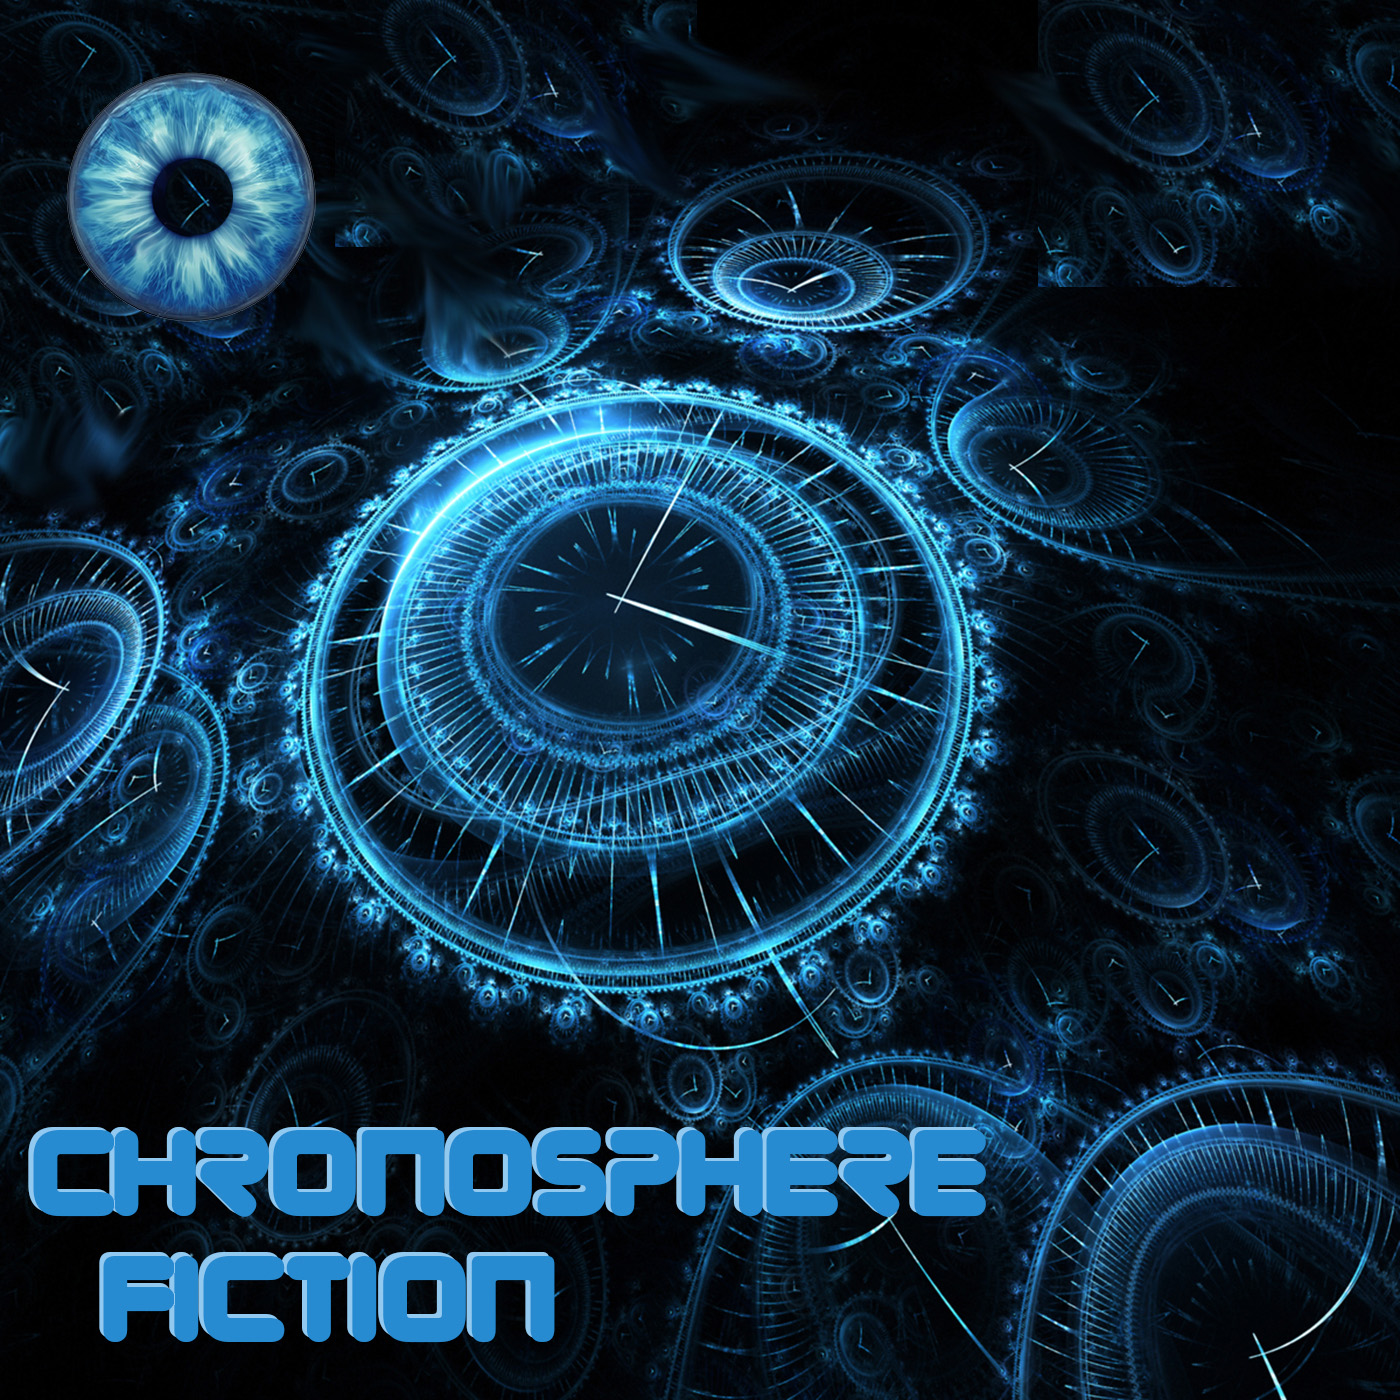 "Chronosphere Fiction" Podcast